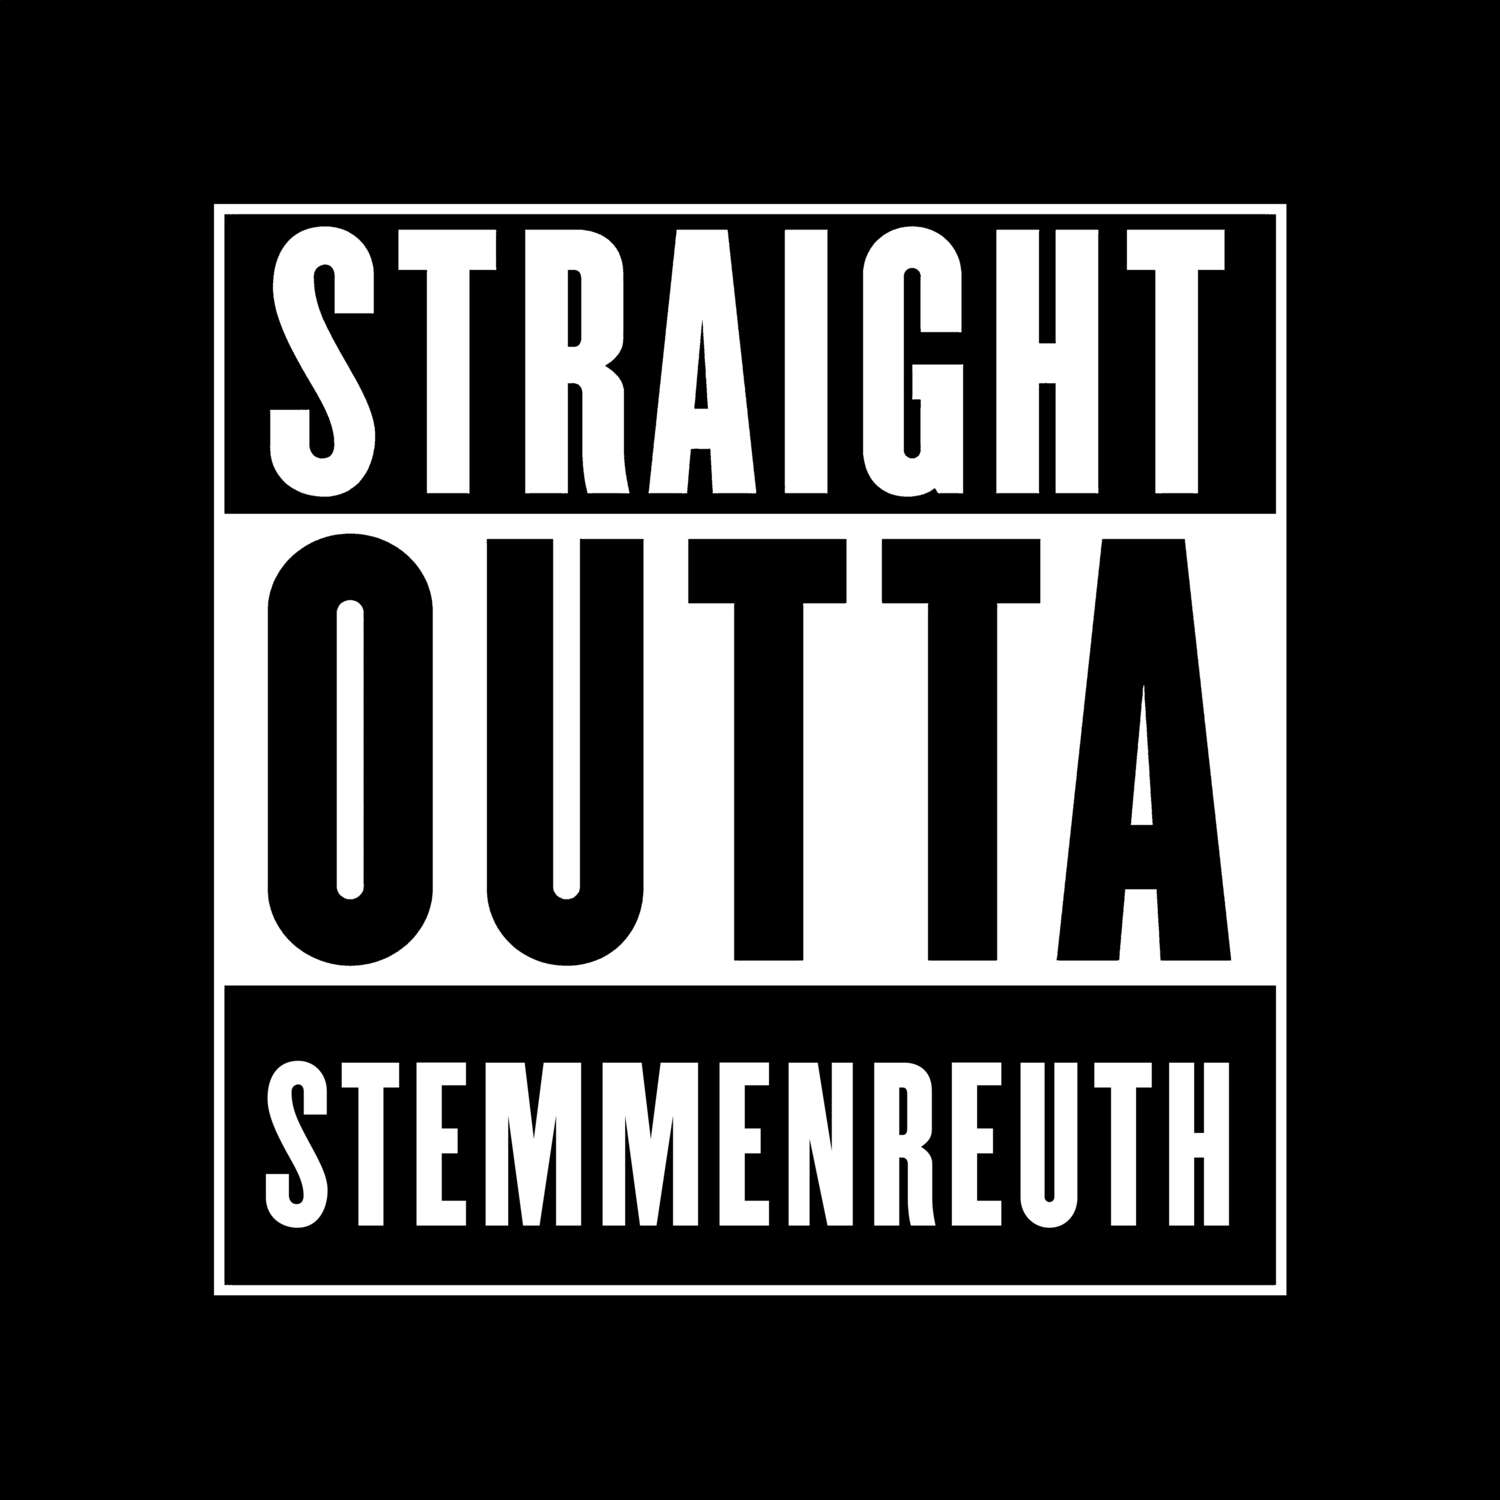 Stemmenreuth T-Shirt »Straight Outta«